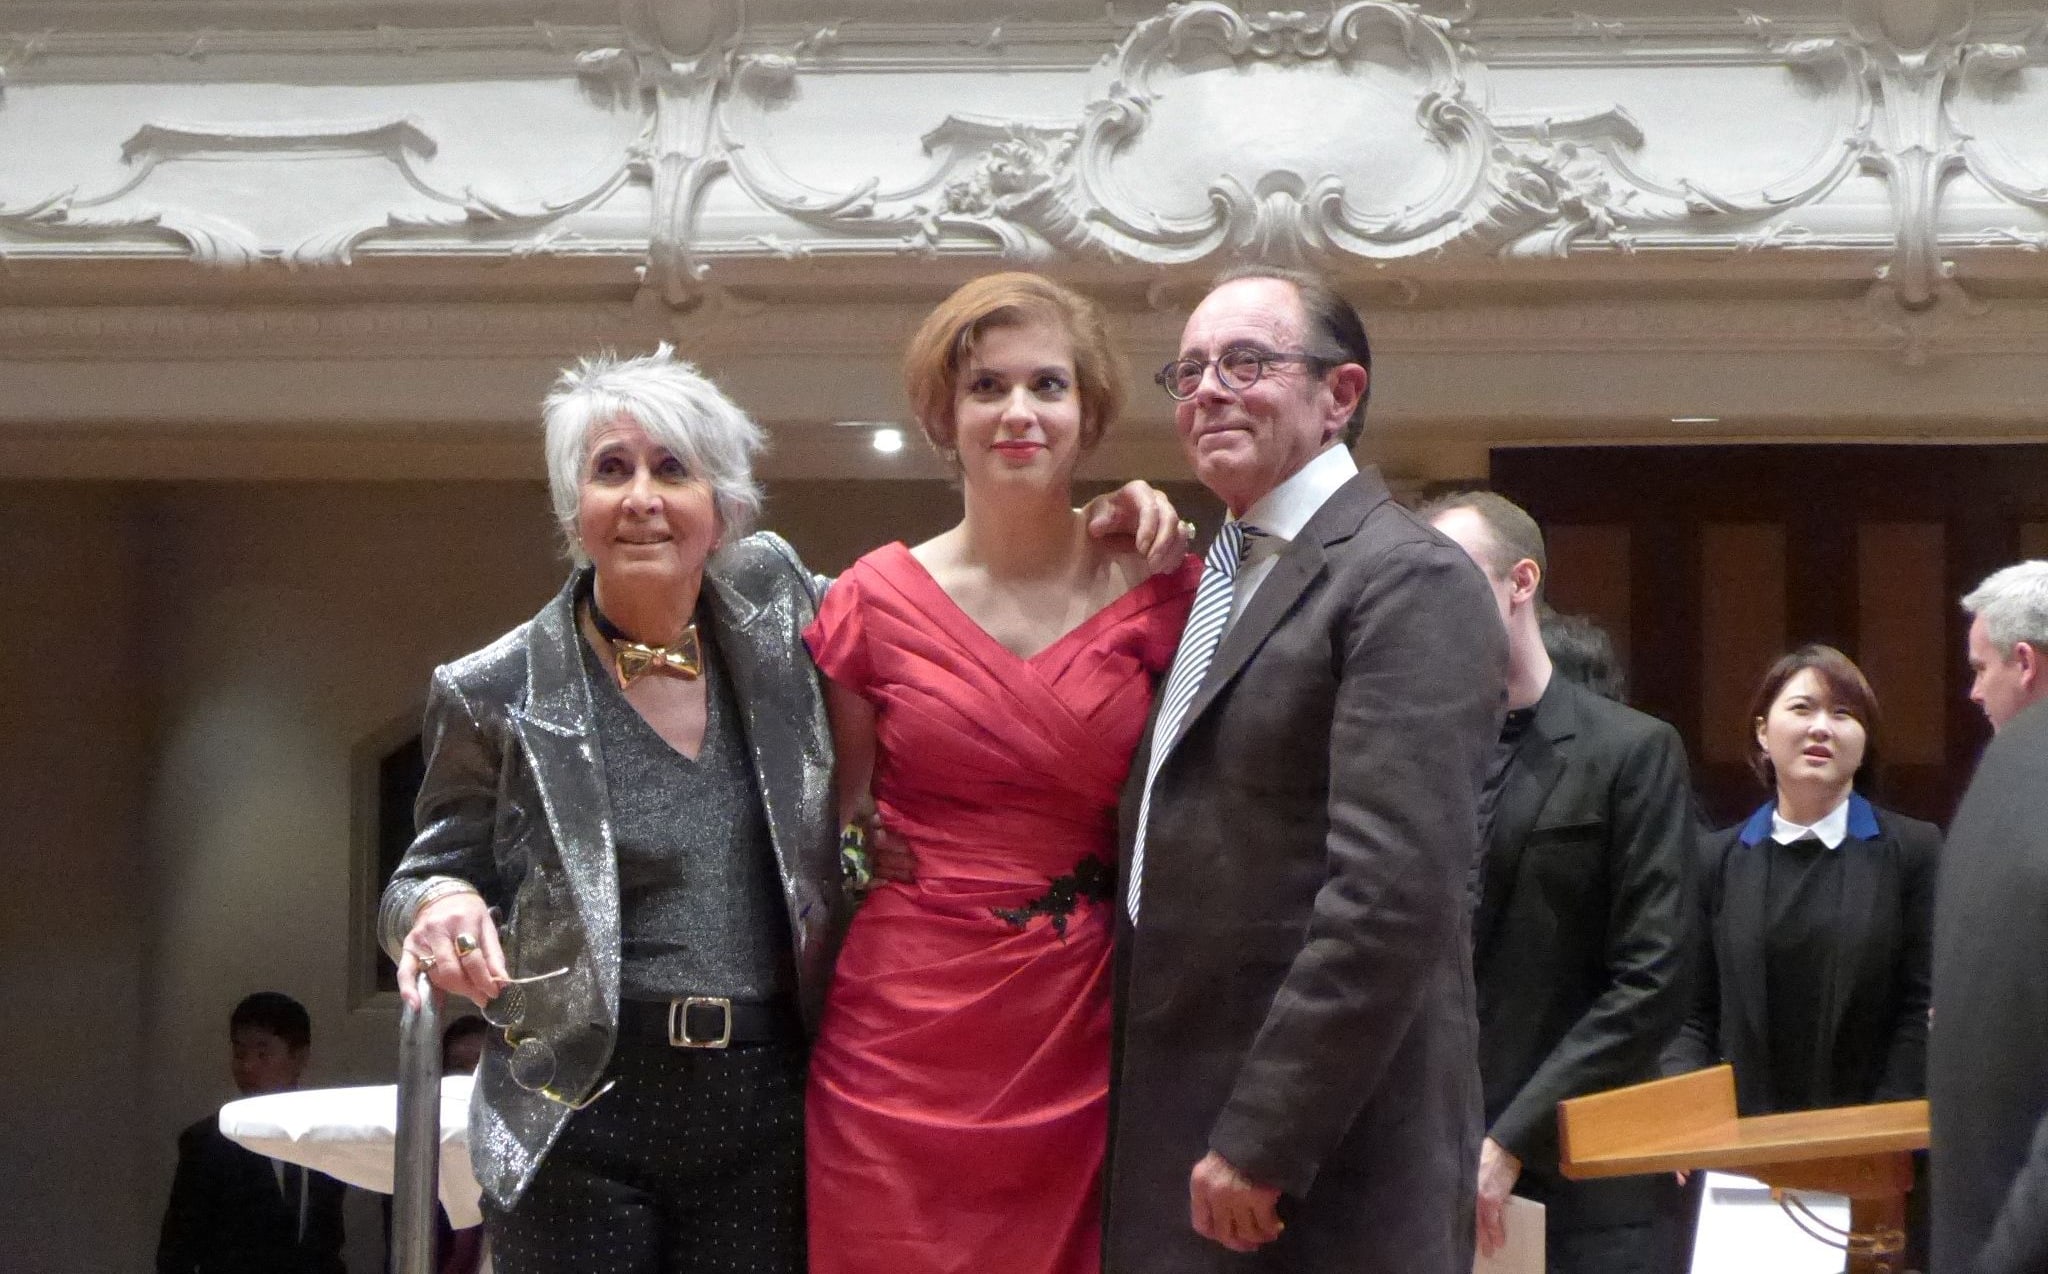 2017 MHIVC winner Ioana Cristina Goicea with Christine, Lady and Sir Michael Hill